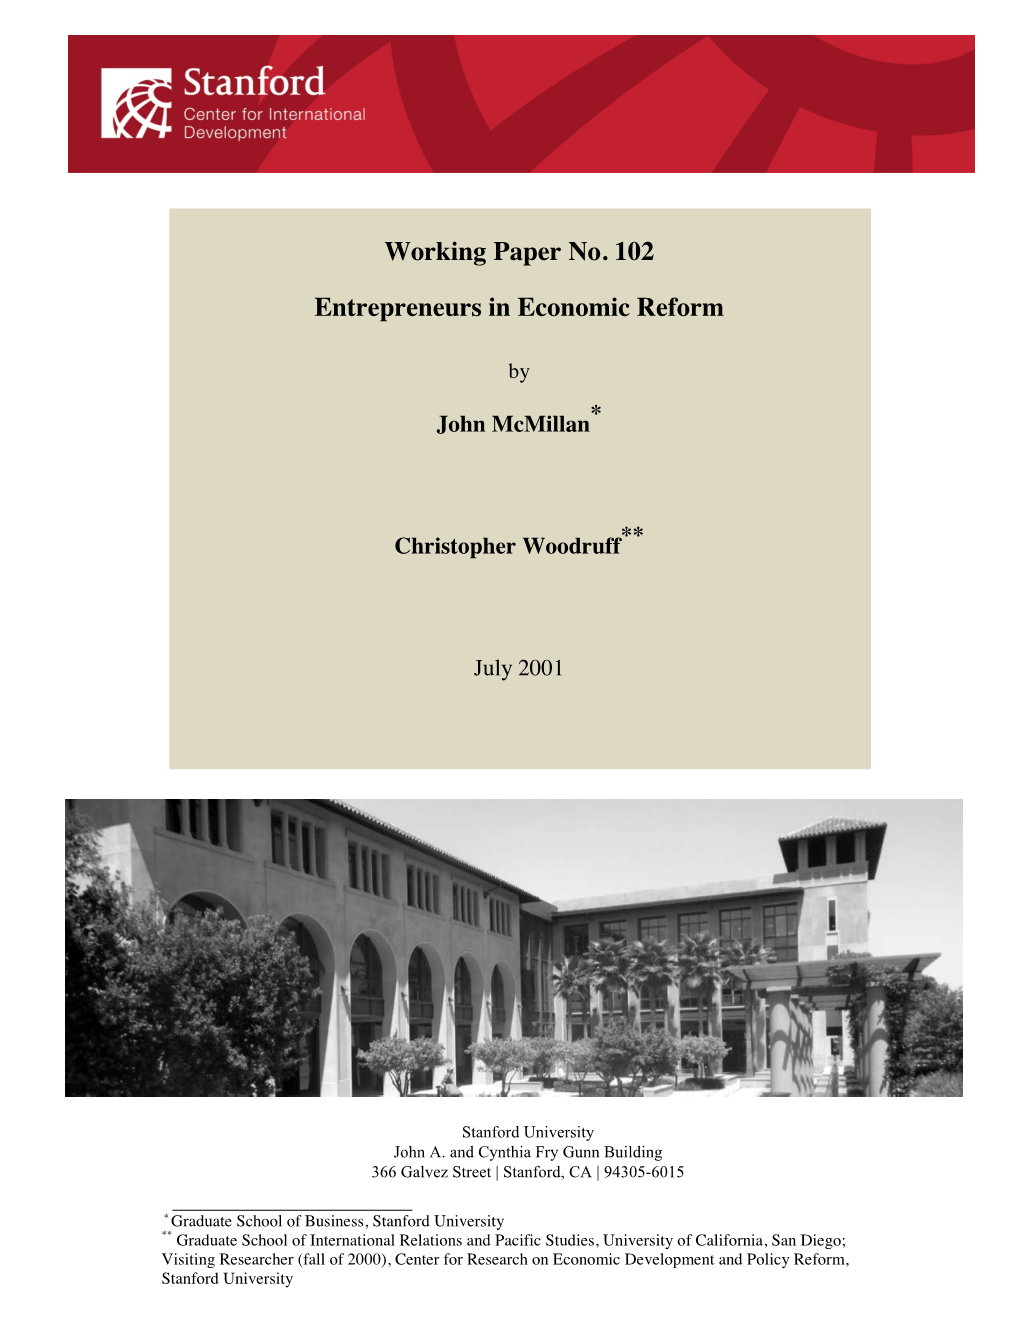 Working Paper No. 102 Entrepreneurs in Economic Reform